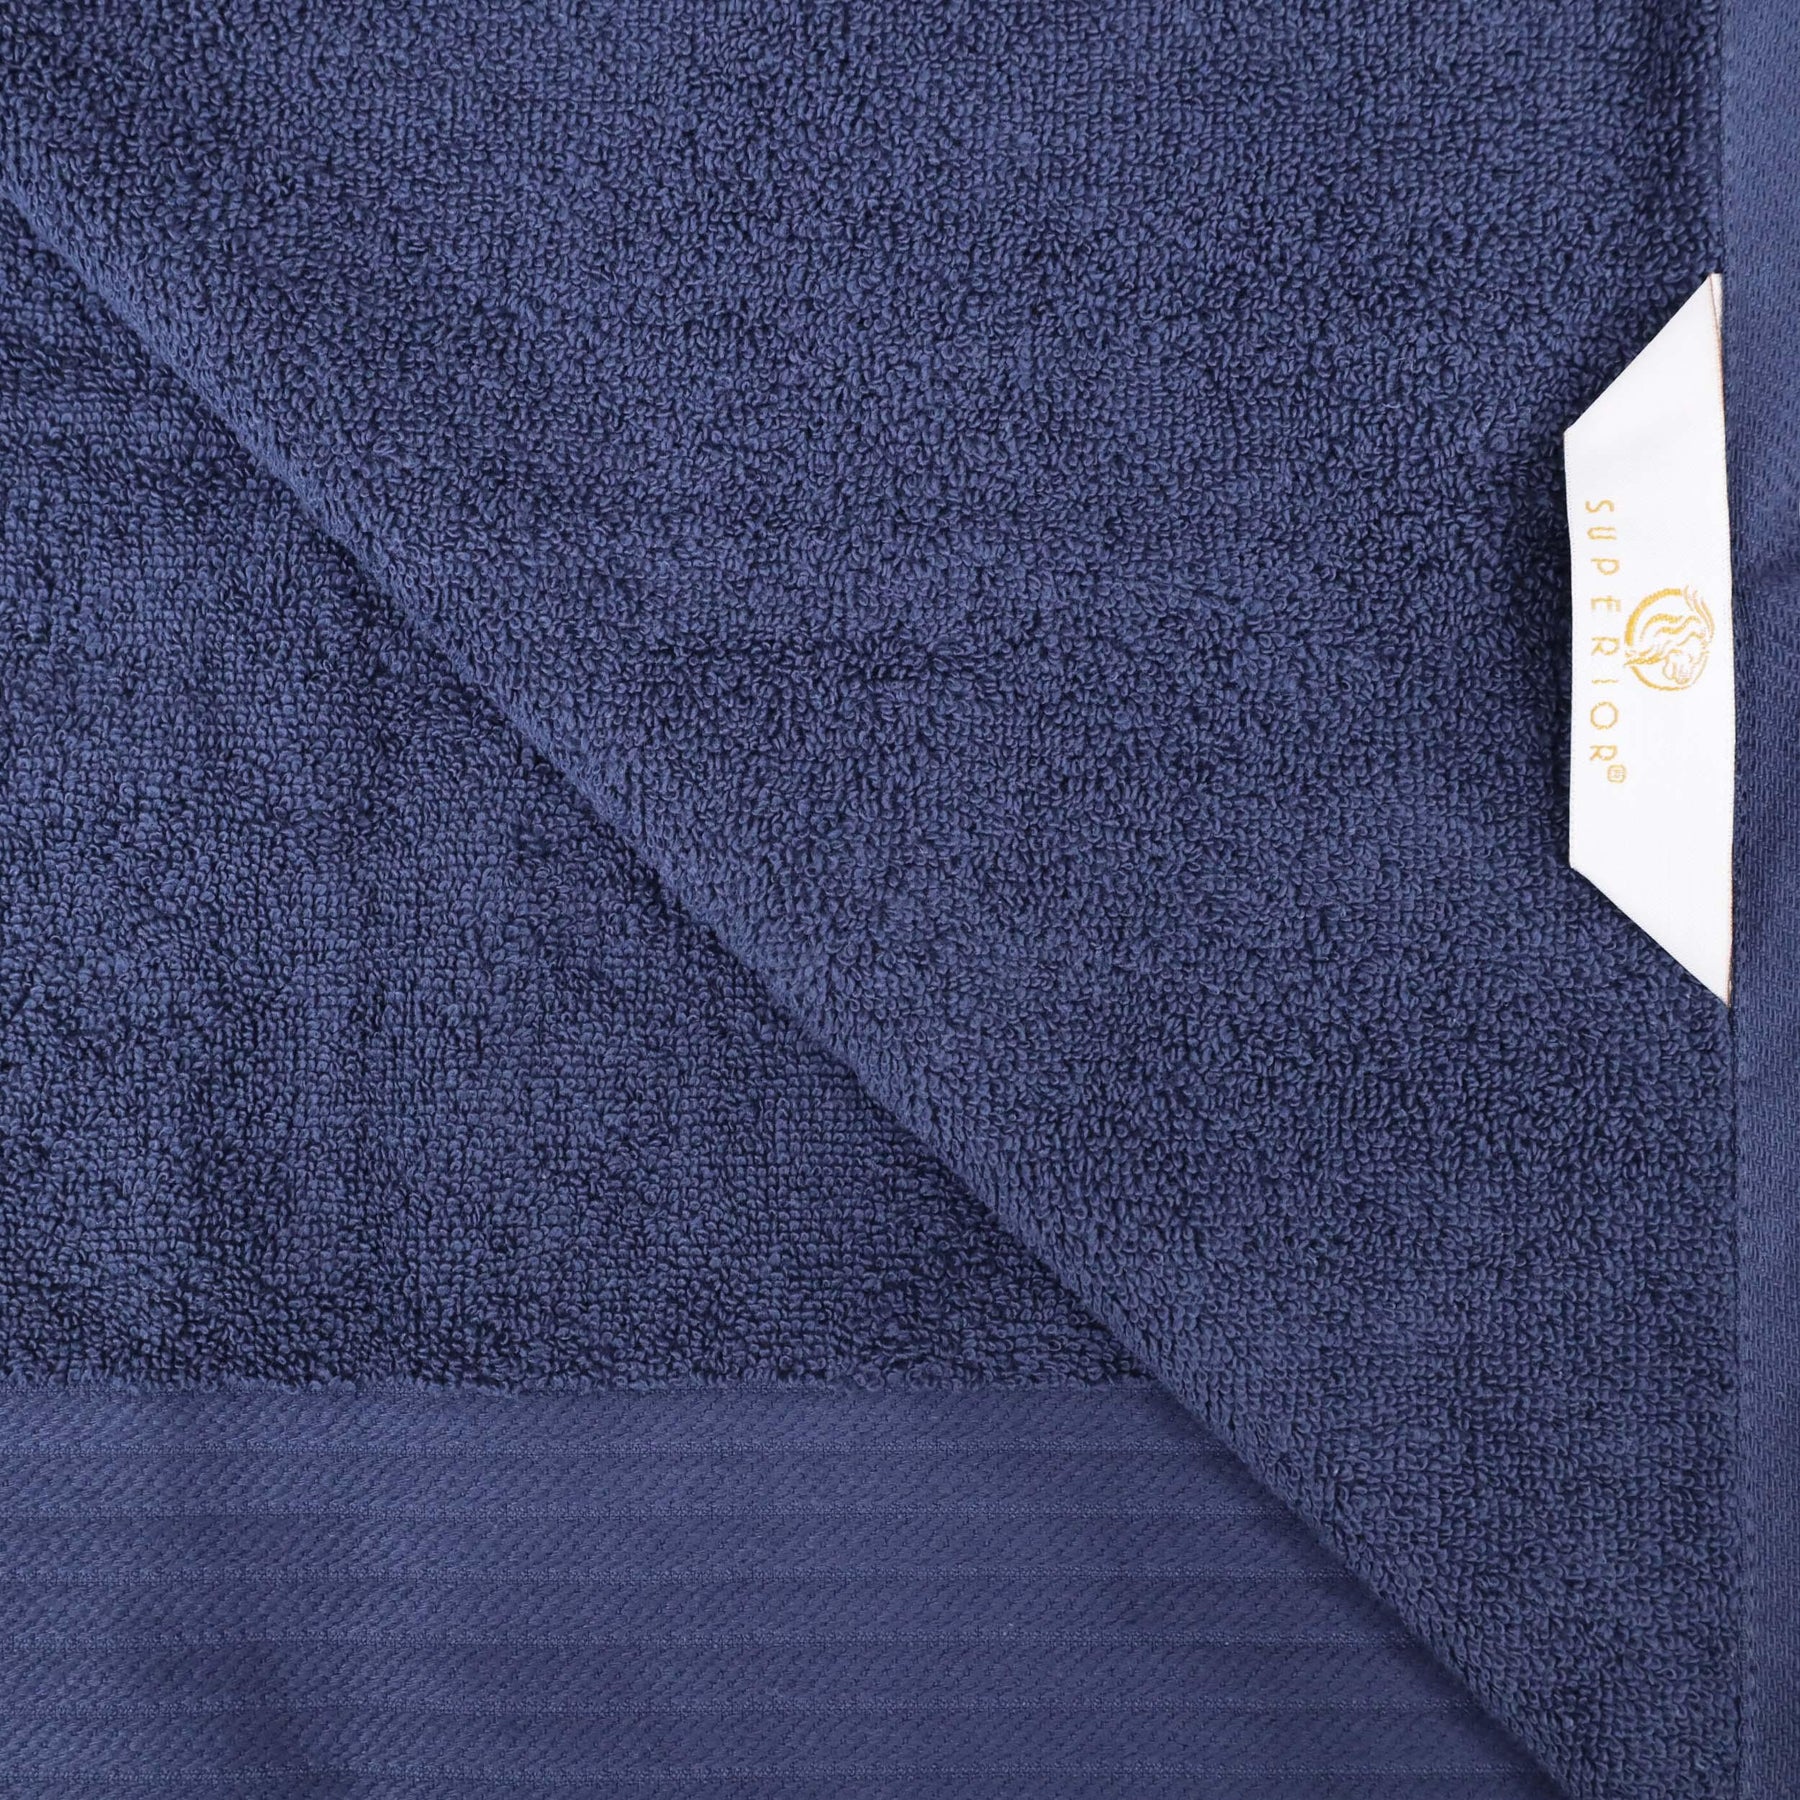 Premium Turkish Cotton Jacquard Herringbone and Solid 8-Piece Towel Set - Navy Blue